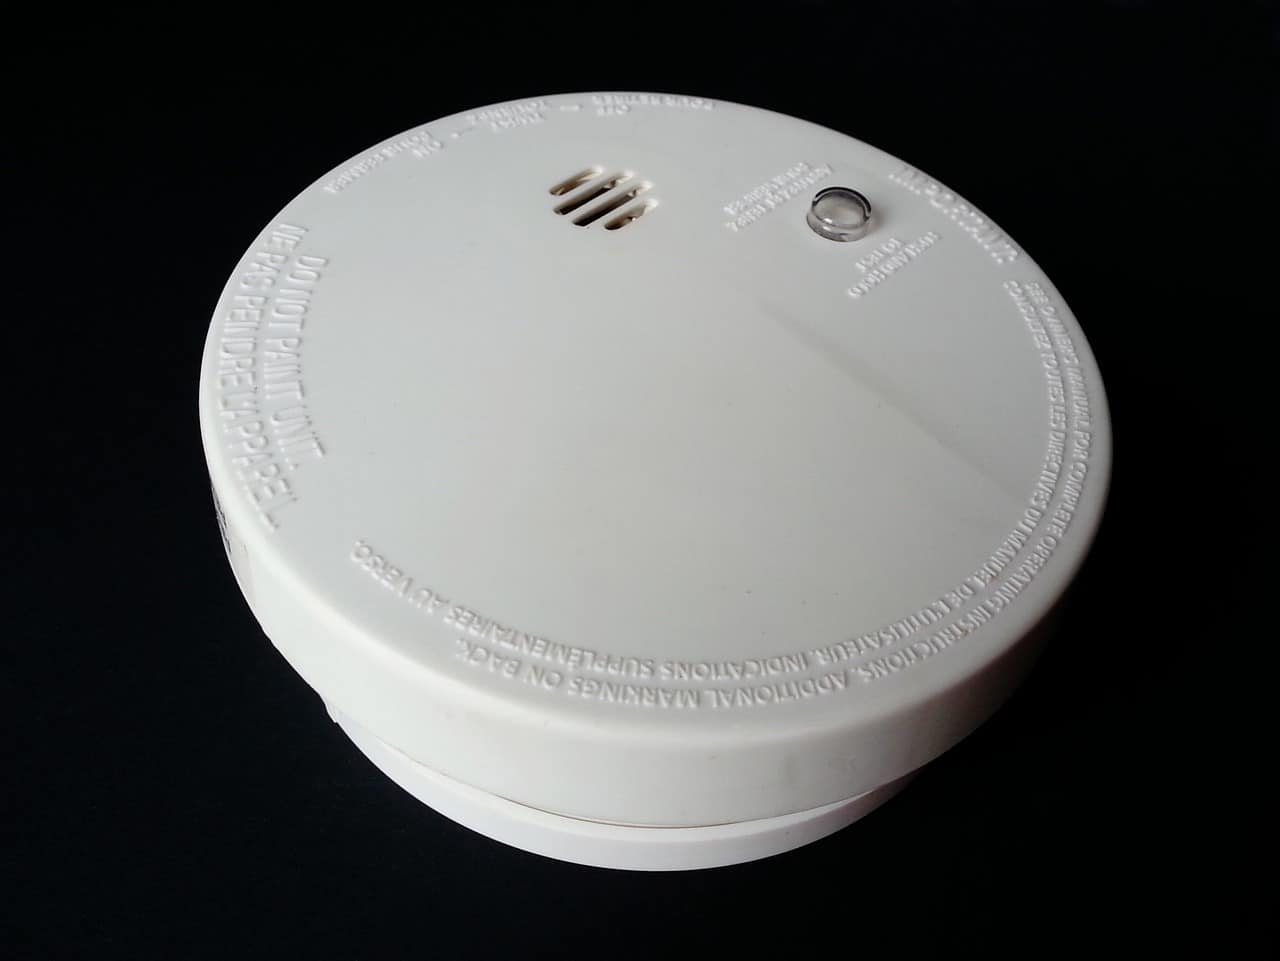 sensor security alarm white